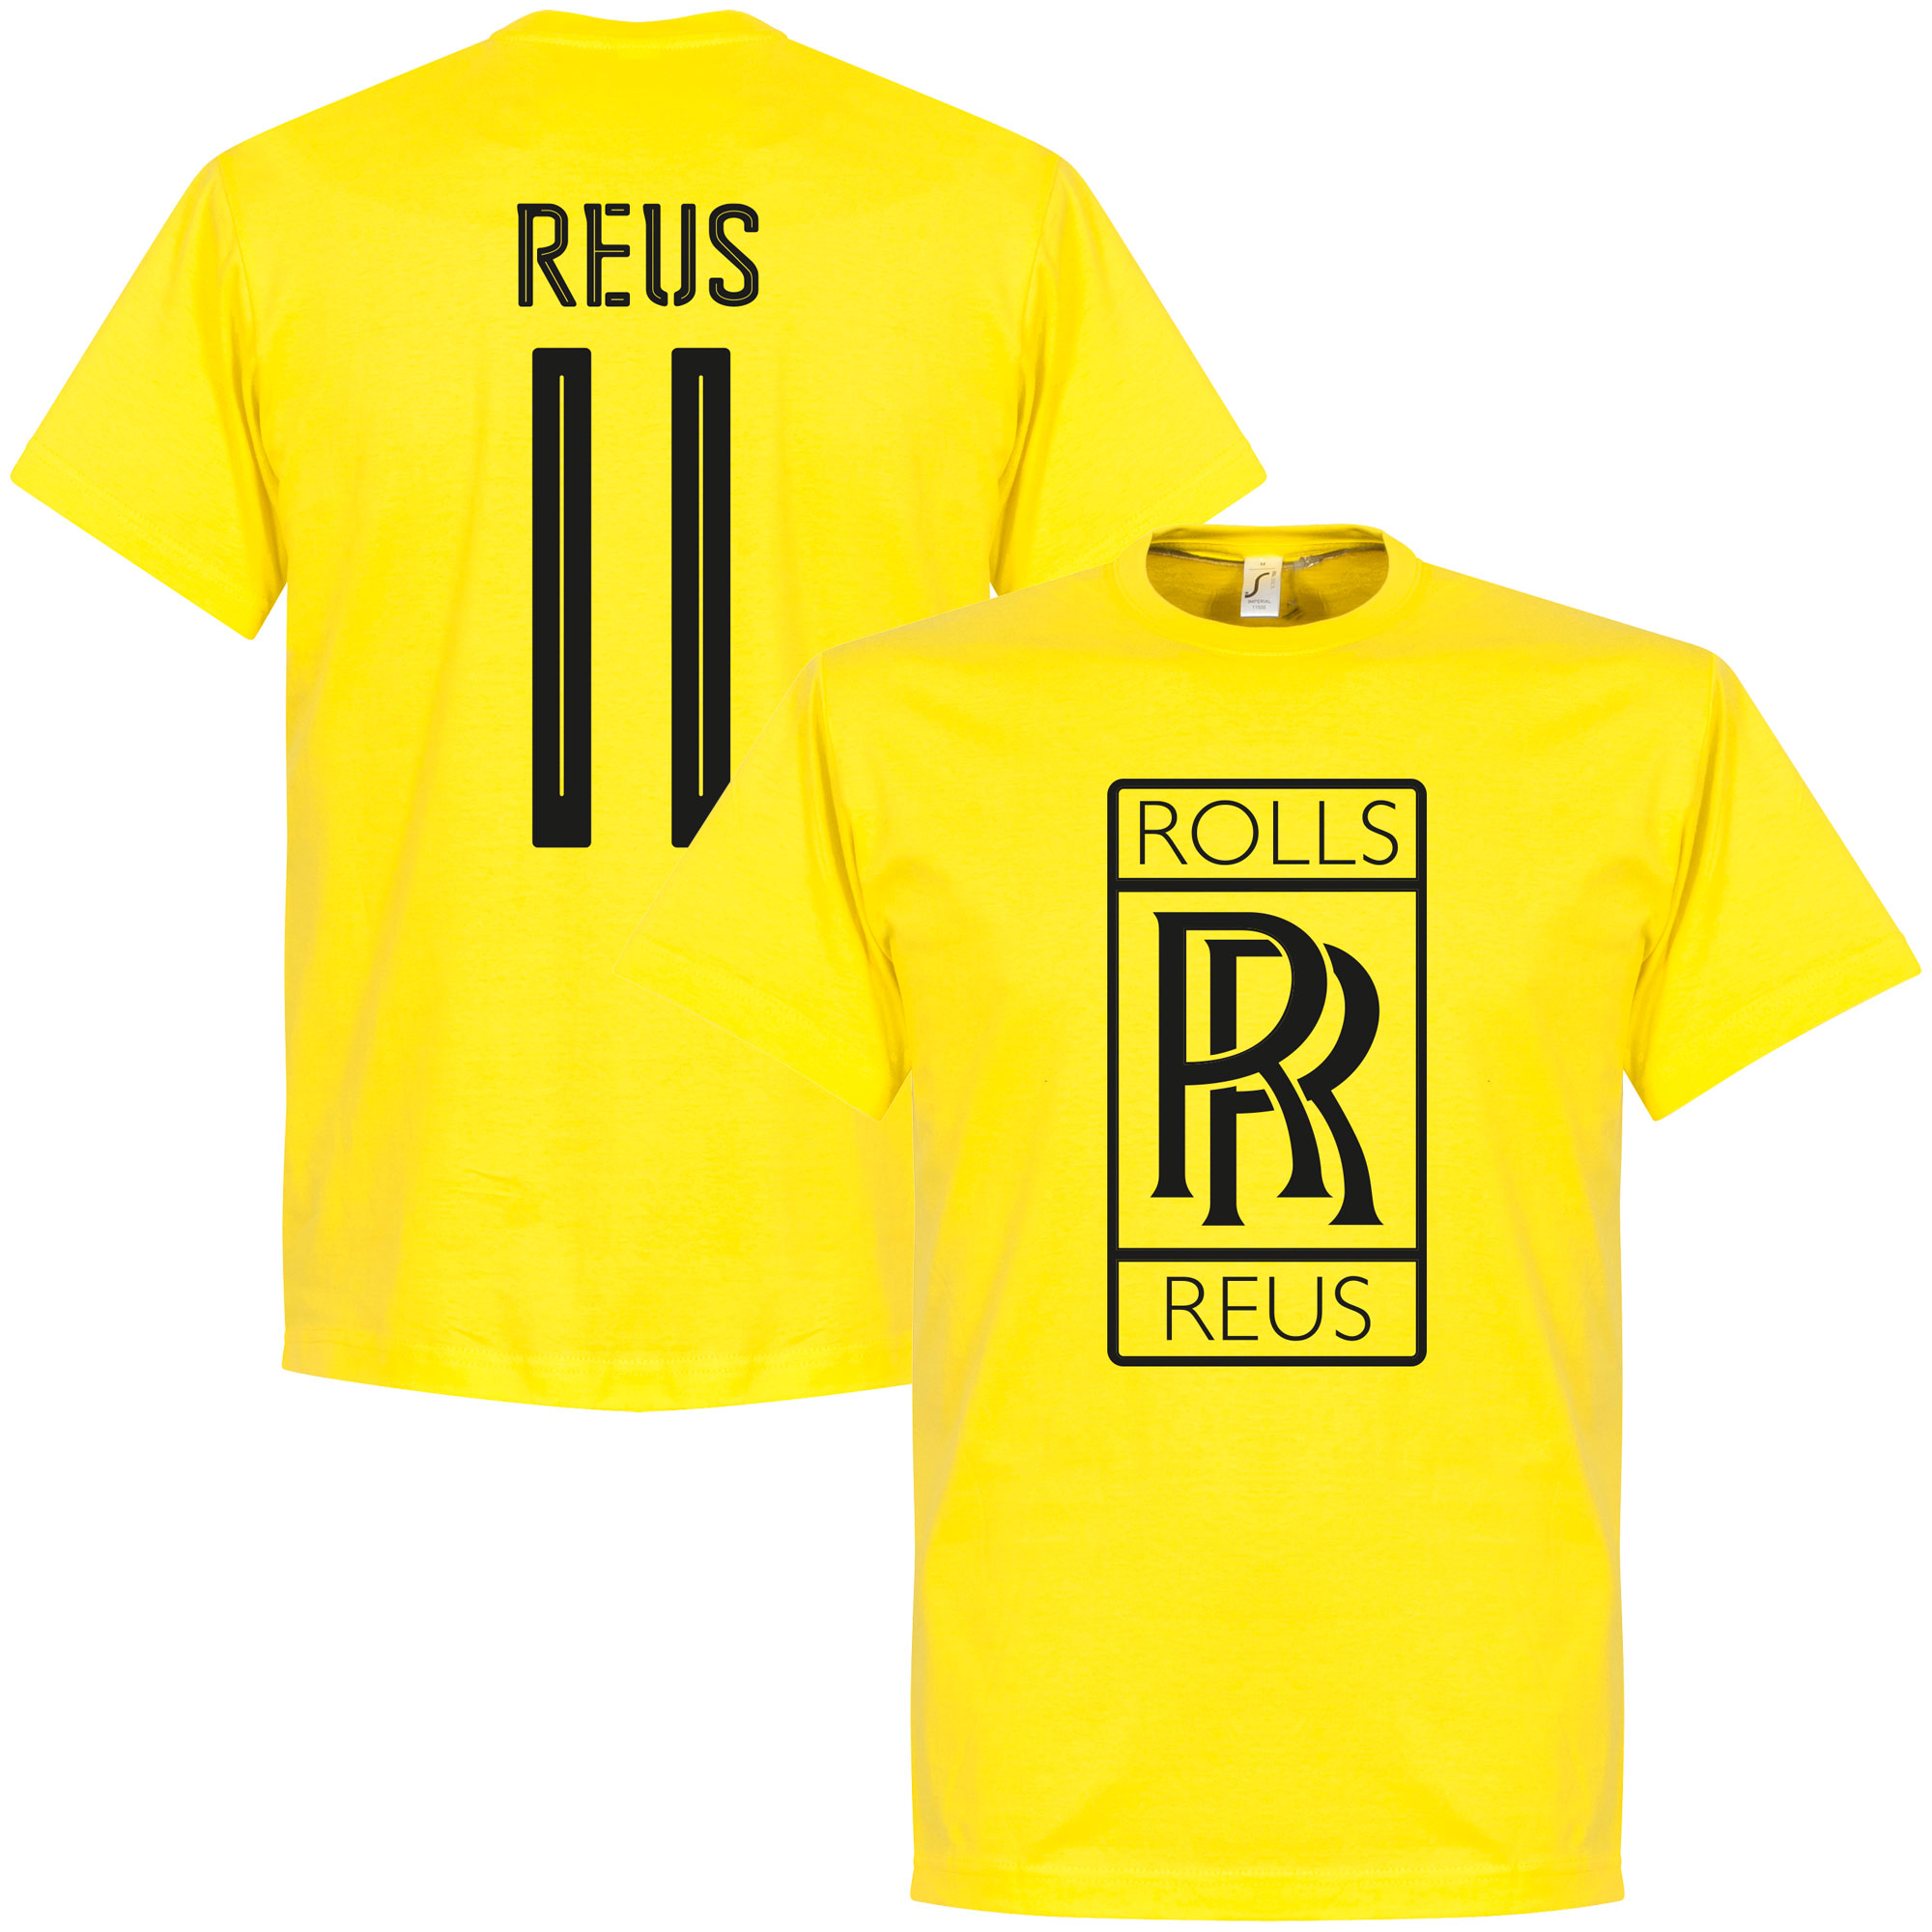 Rolls Reus 11 Dortmund T-Shirt XS